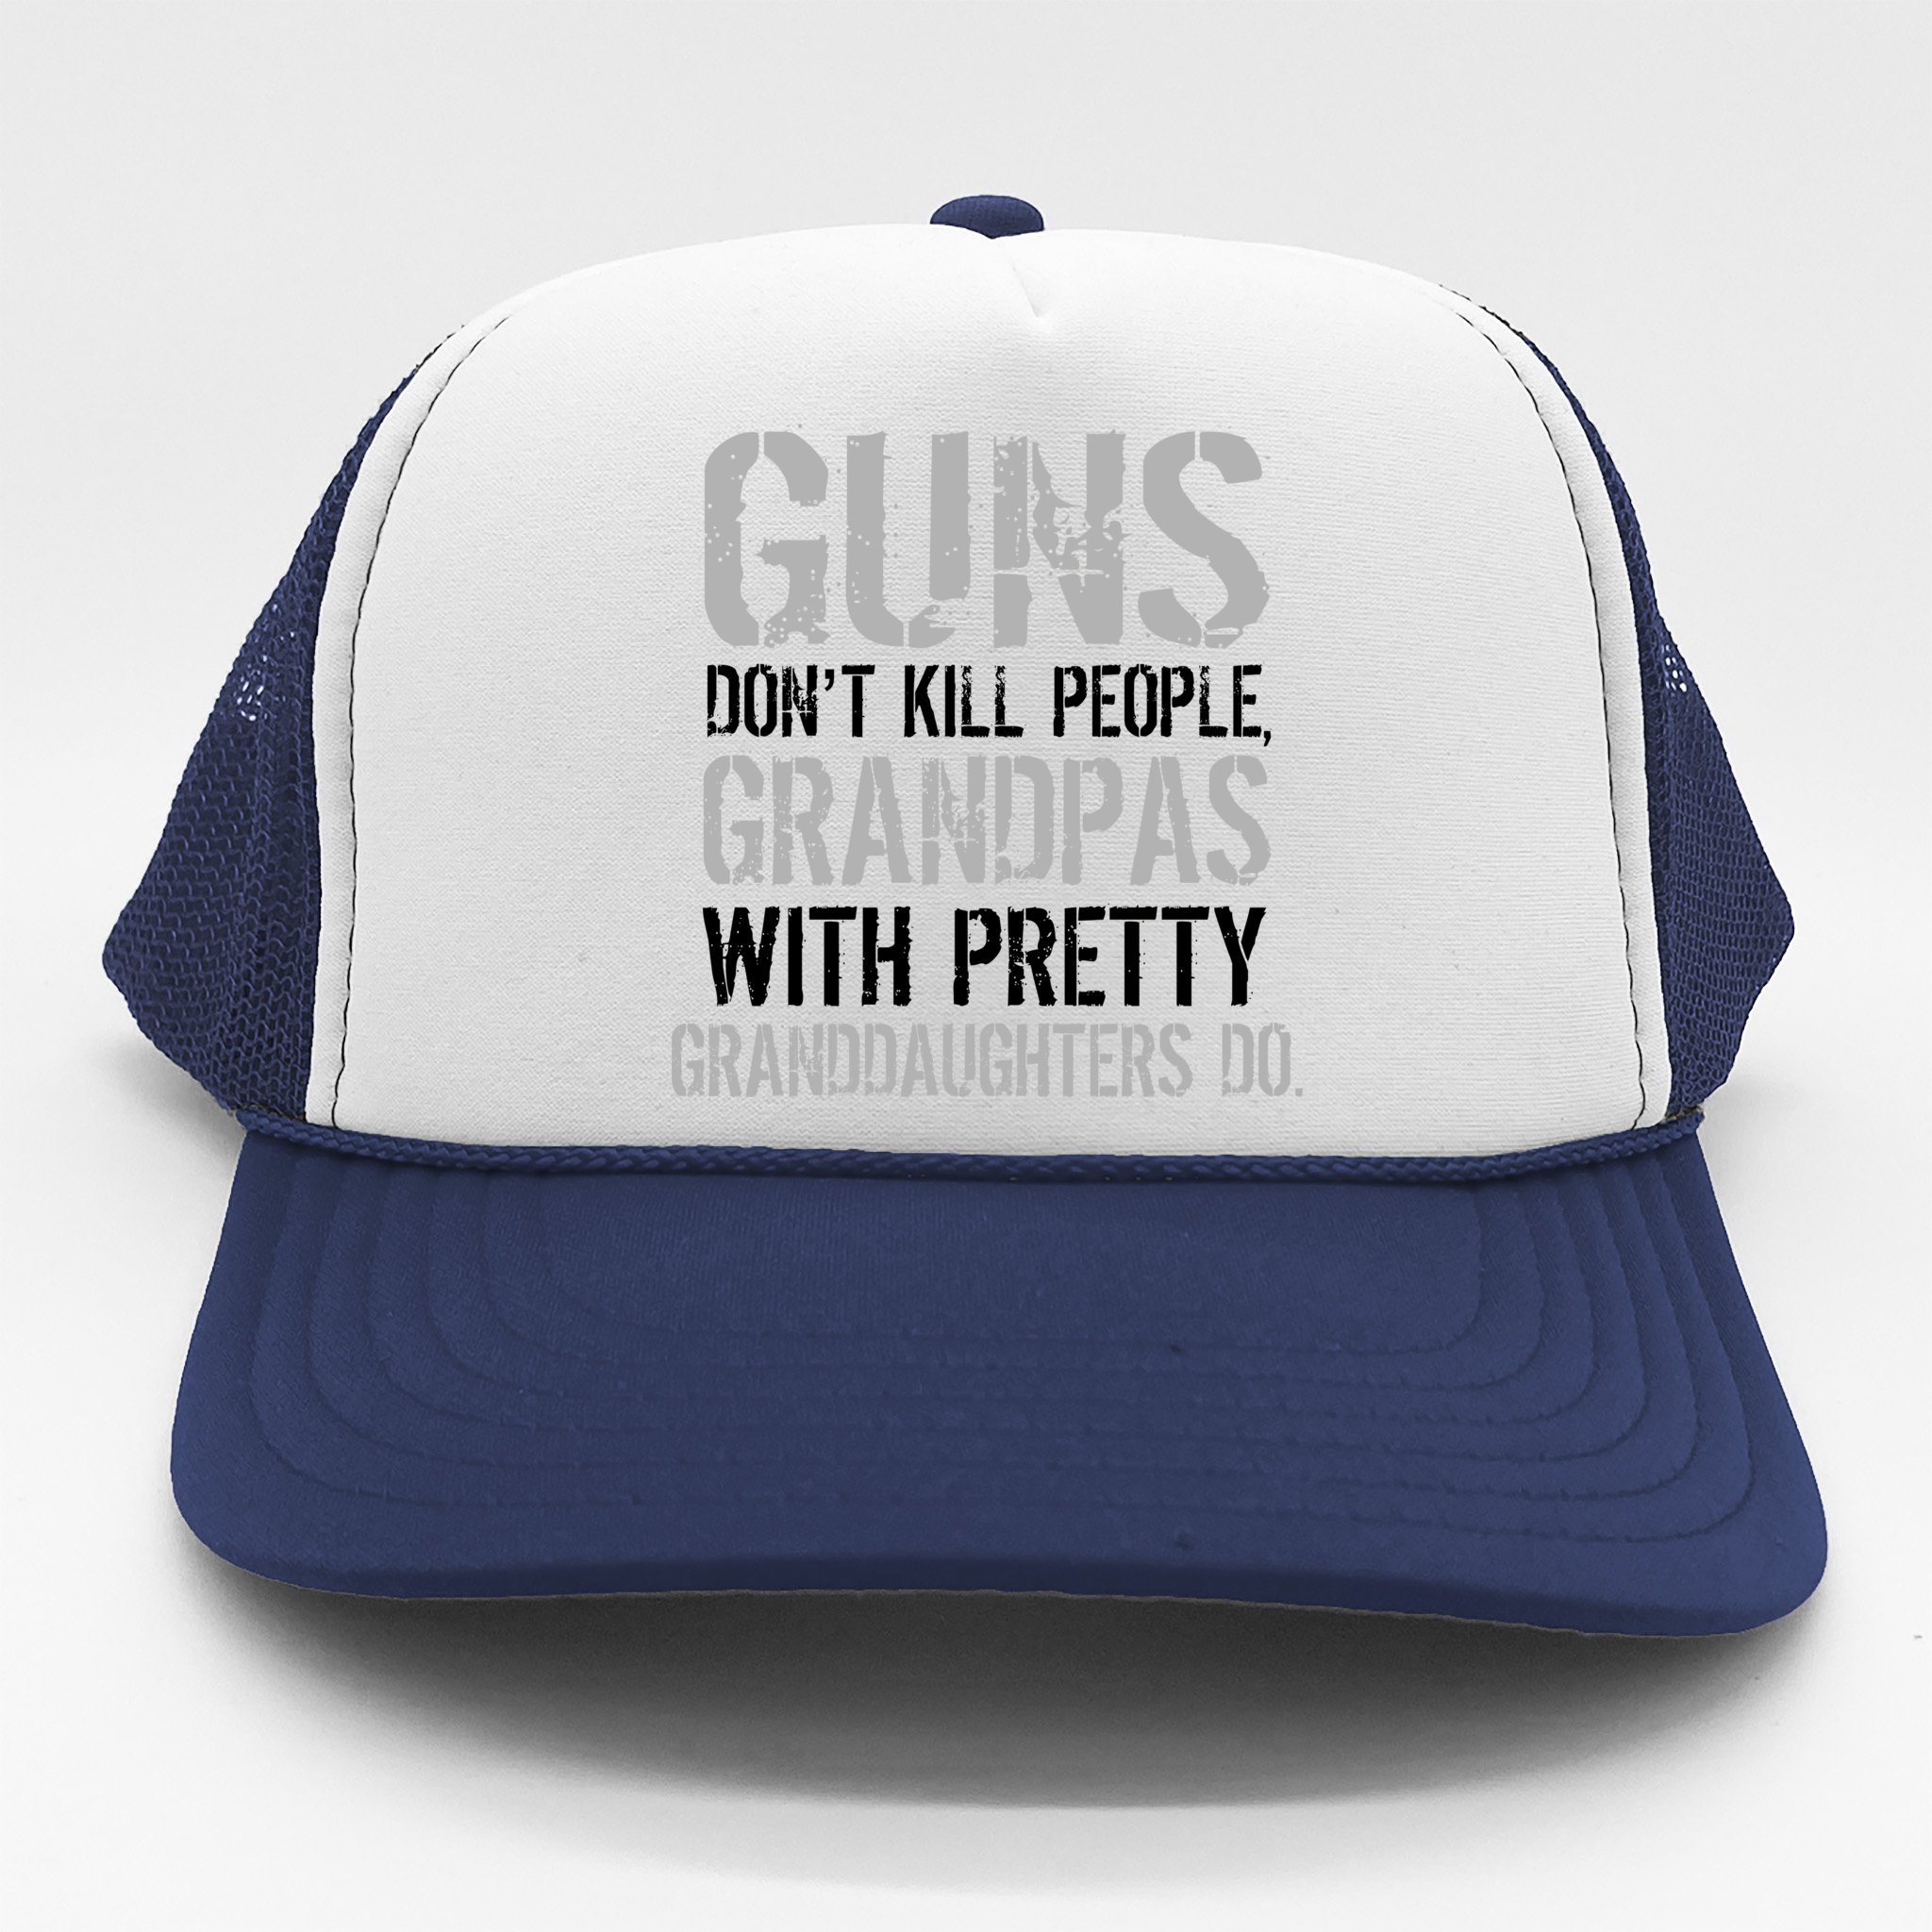 Guns Don'T Kill People Grandpas Funny Adjustable Trucker Hat Cap 